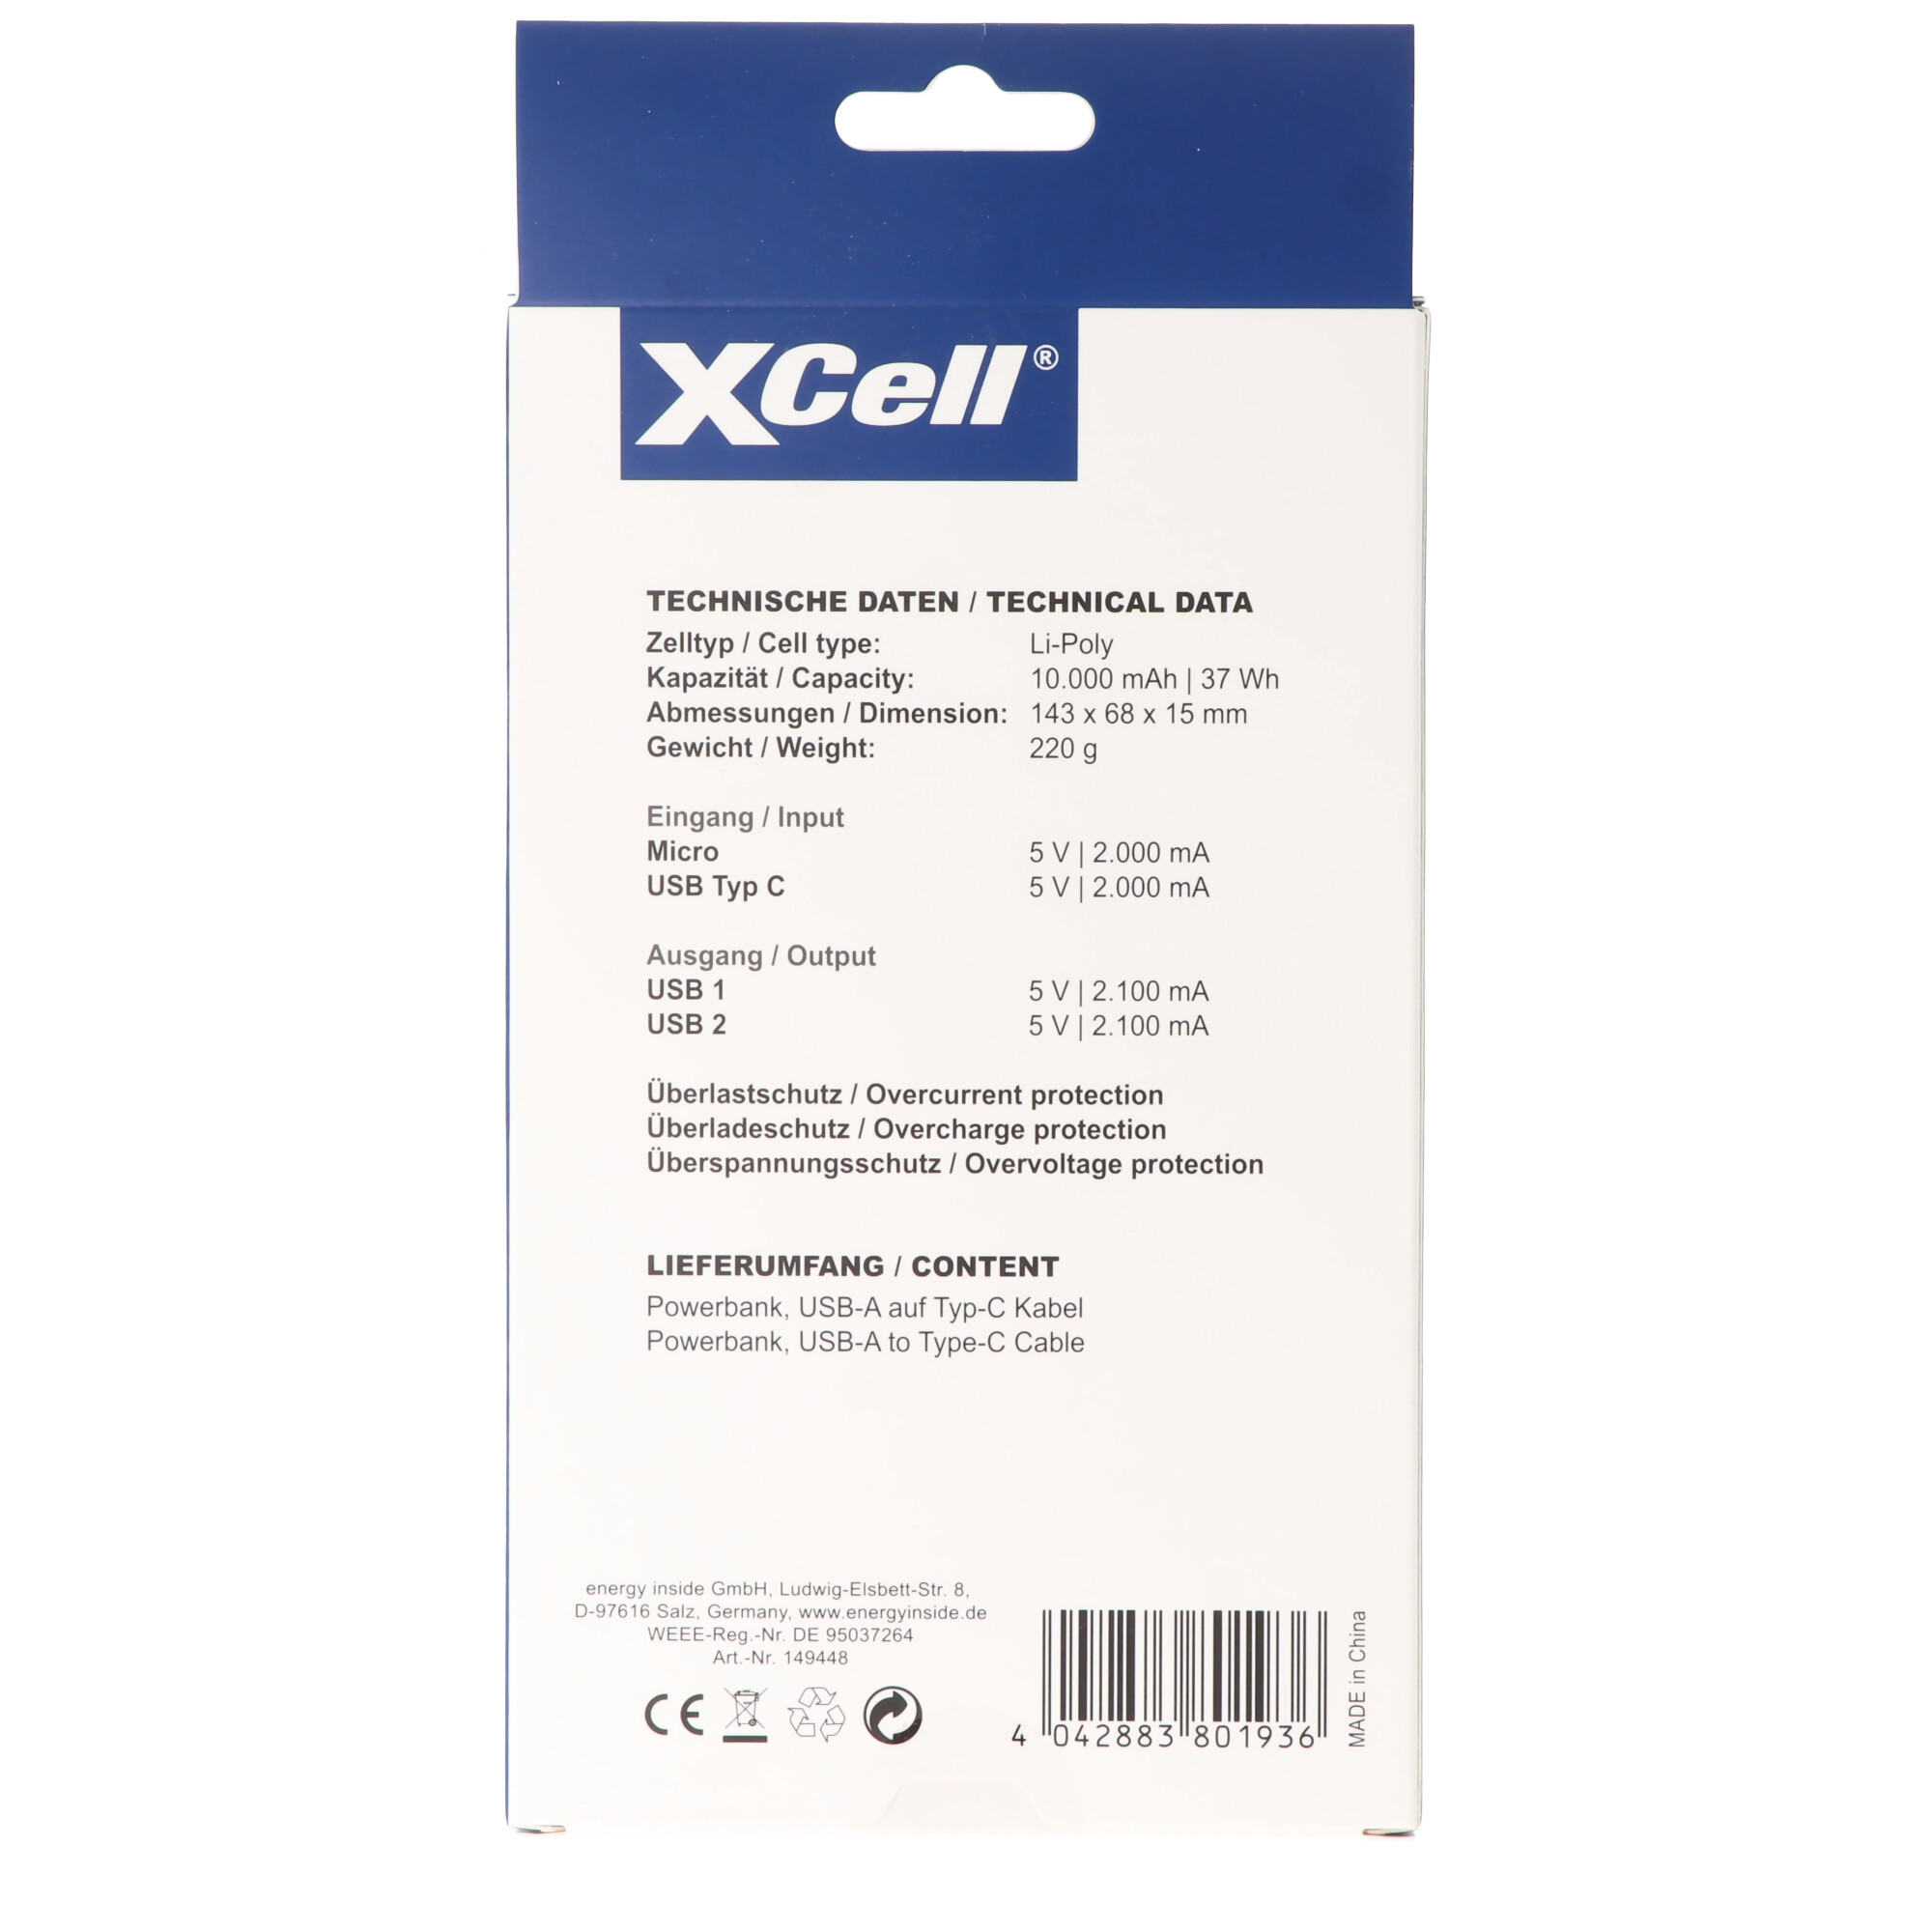 XCell Powerbank X10000 mit 10.000mAh Kapazität, schlankes Design, LED-Display, zweifacher USB-Ausgang, USB-C Ladeport